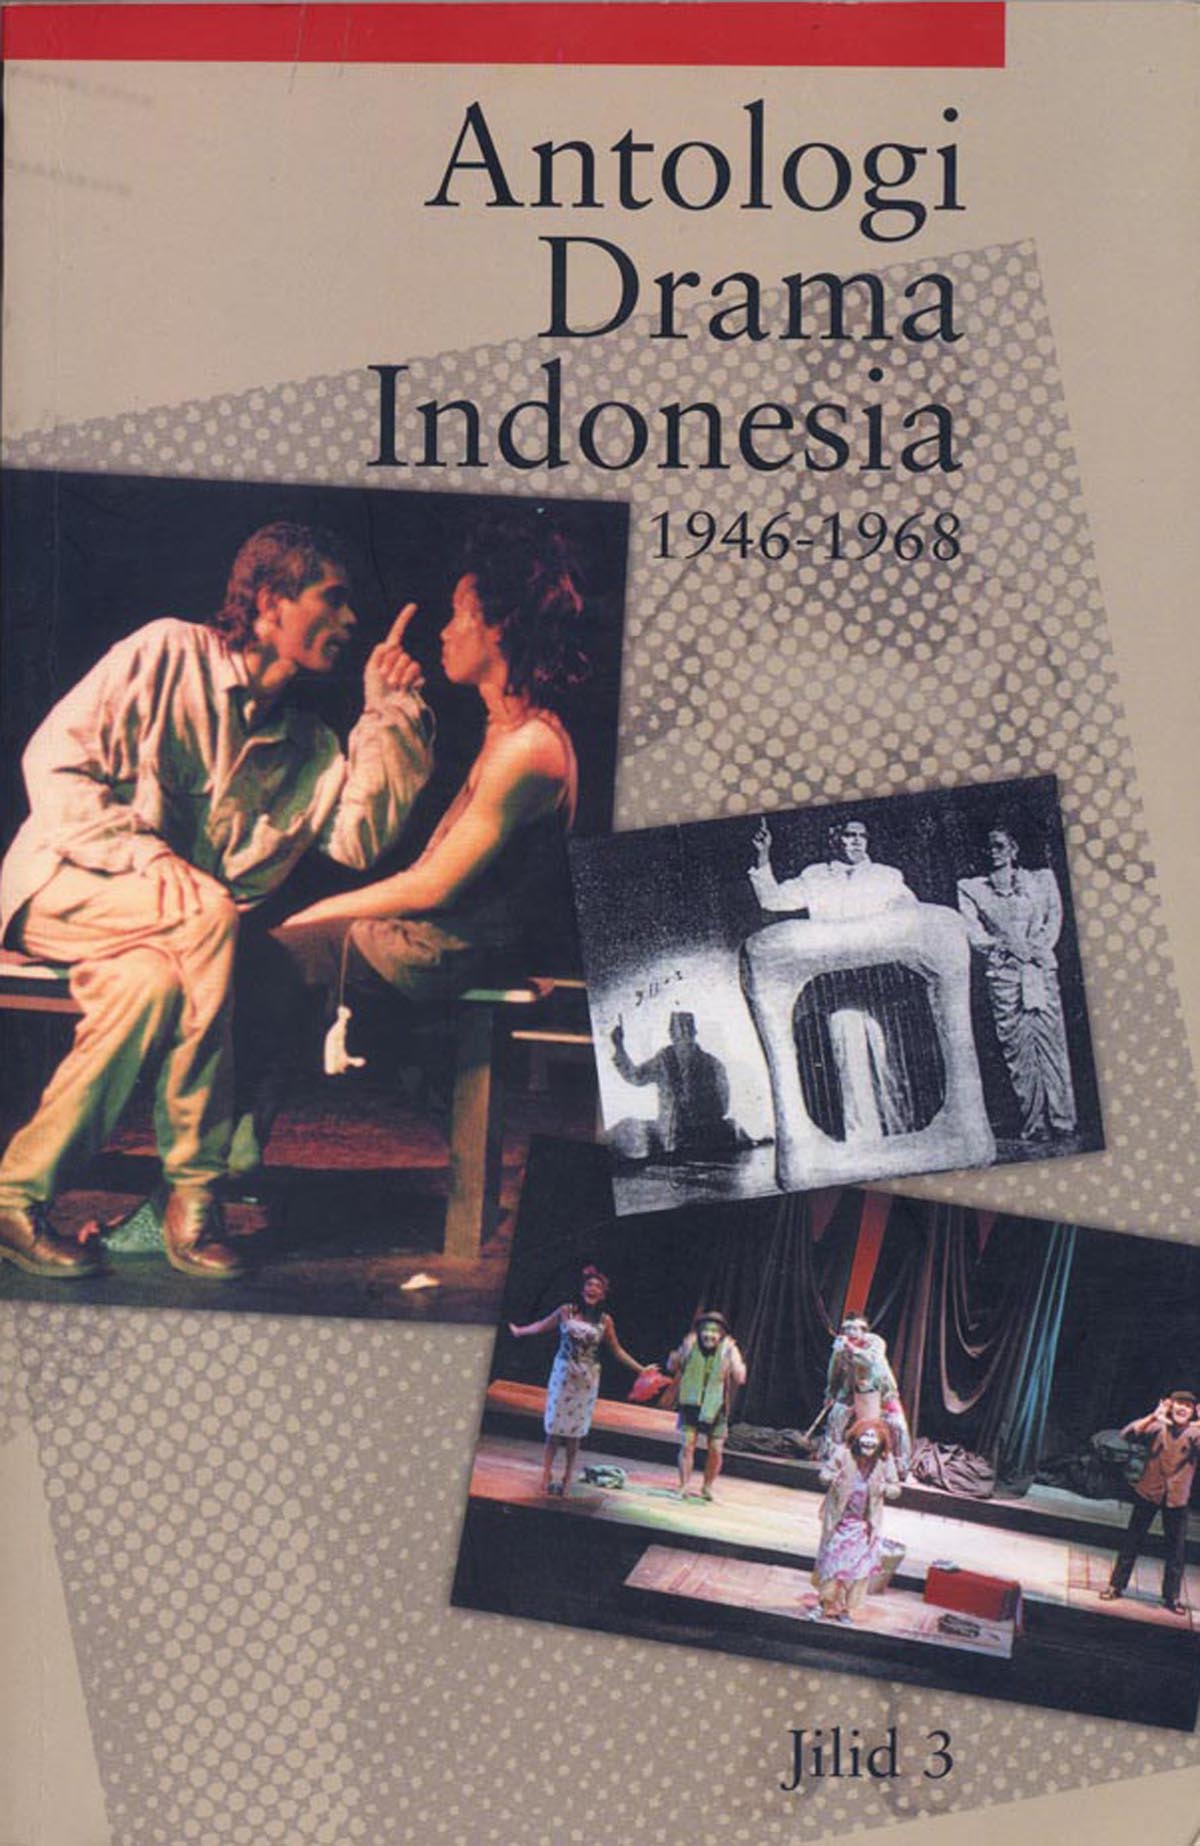 Antologi Drama Indonesia, Jilid 3 (1946-1968)